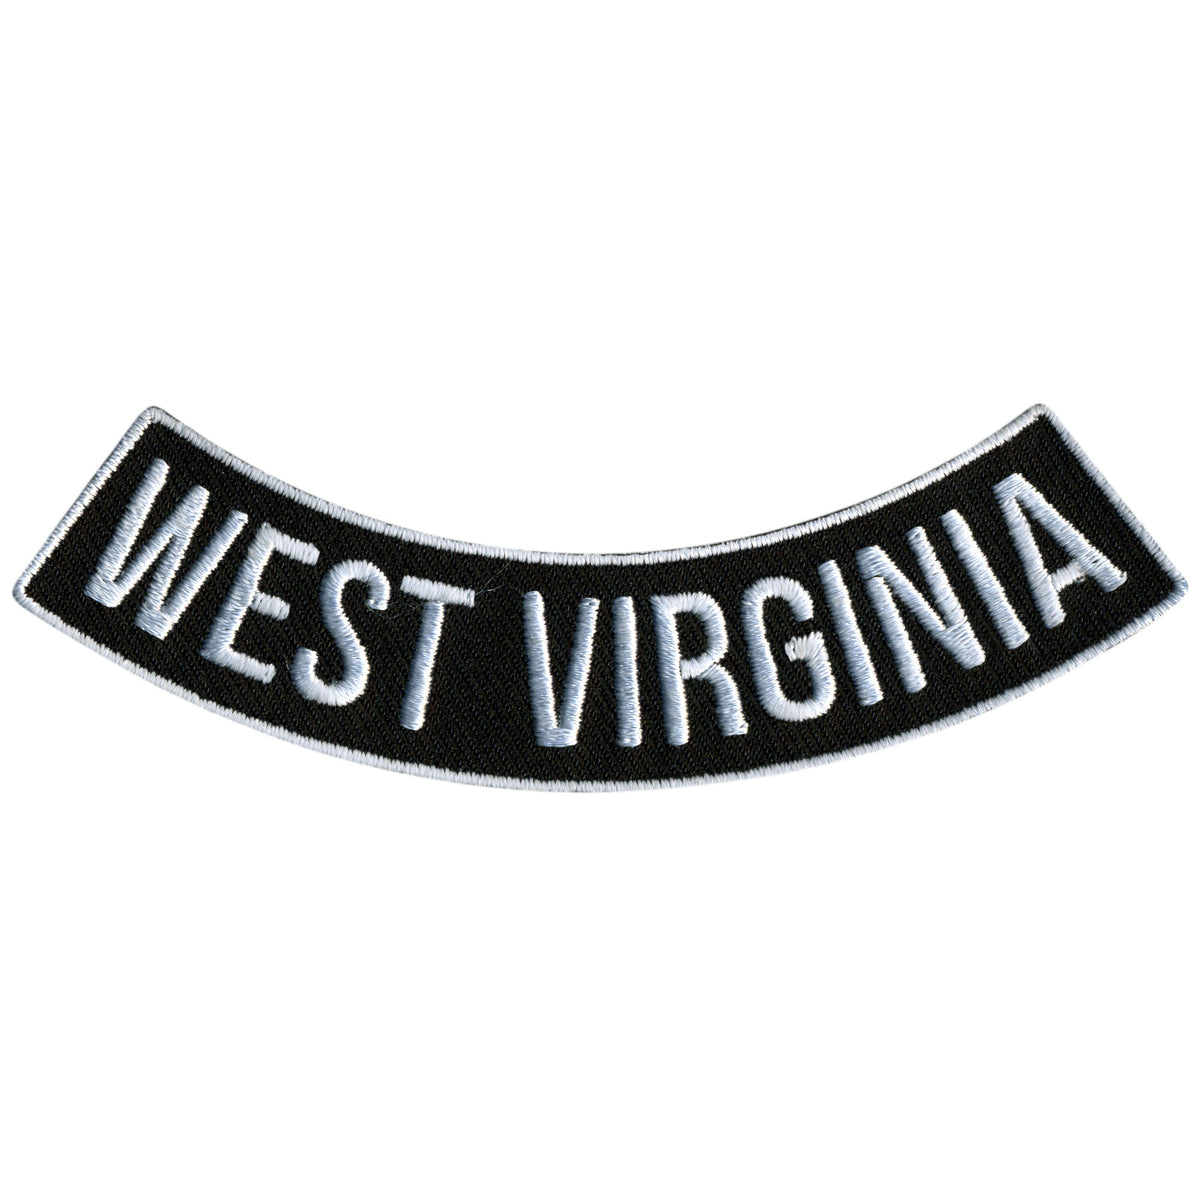 Hot Leathers West Virginia 4” X 1” Bottom Rocker Patch